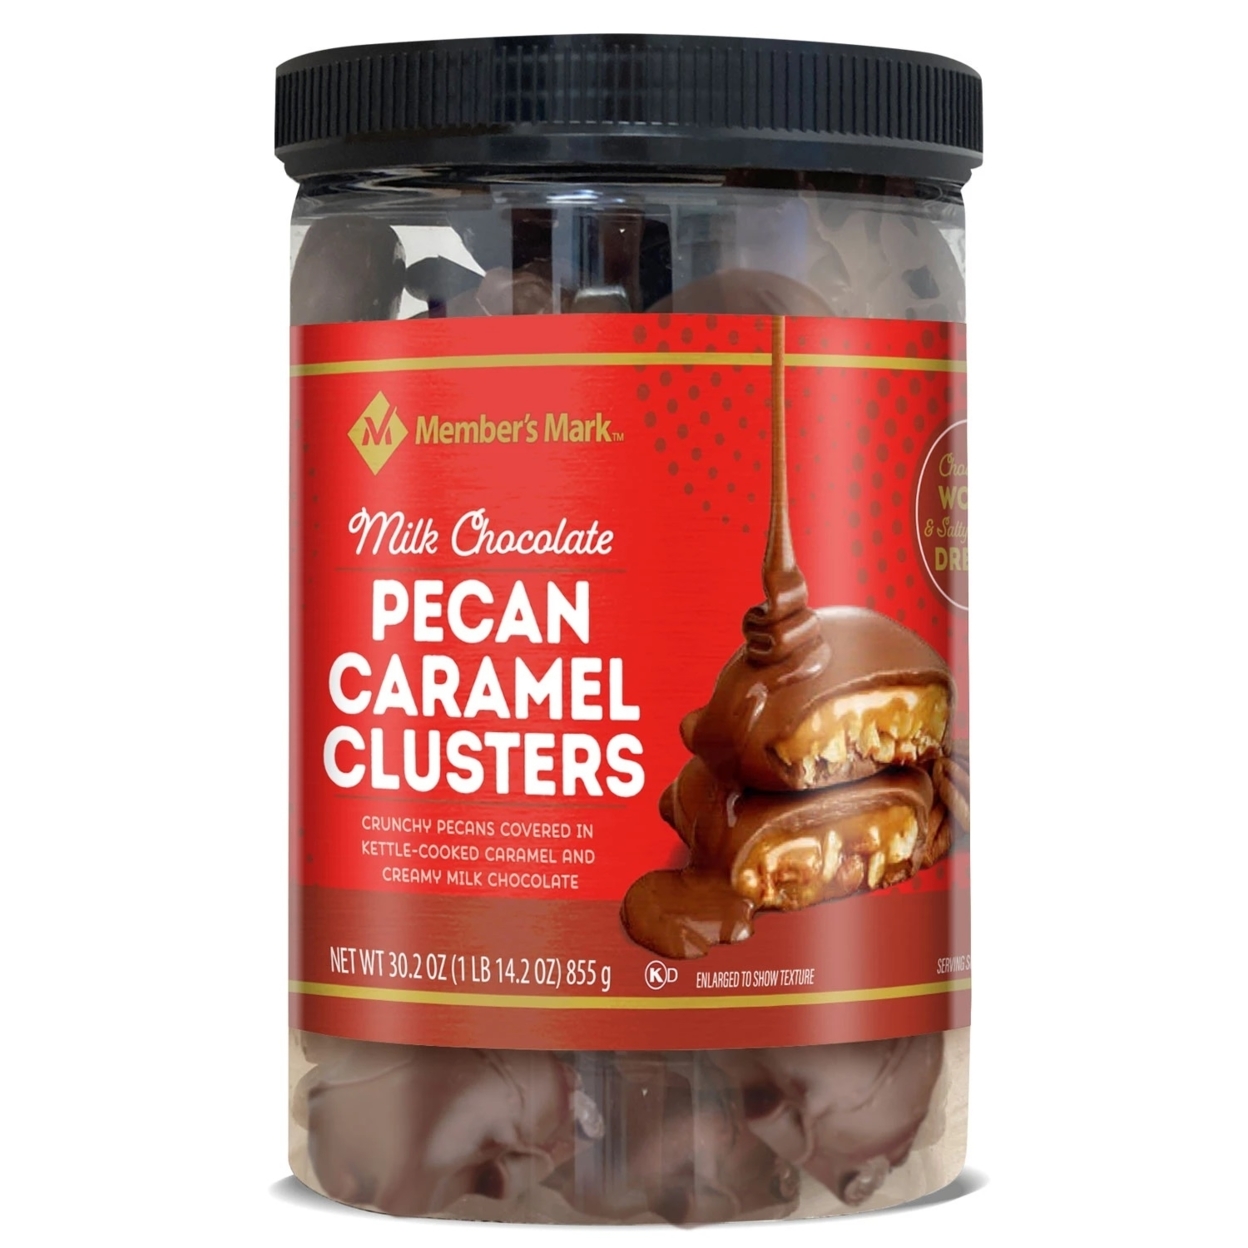 Member's Mark Milk Chocolate Pecan Caramel Clusters, 30.2 Ounce